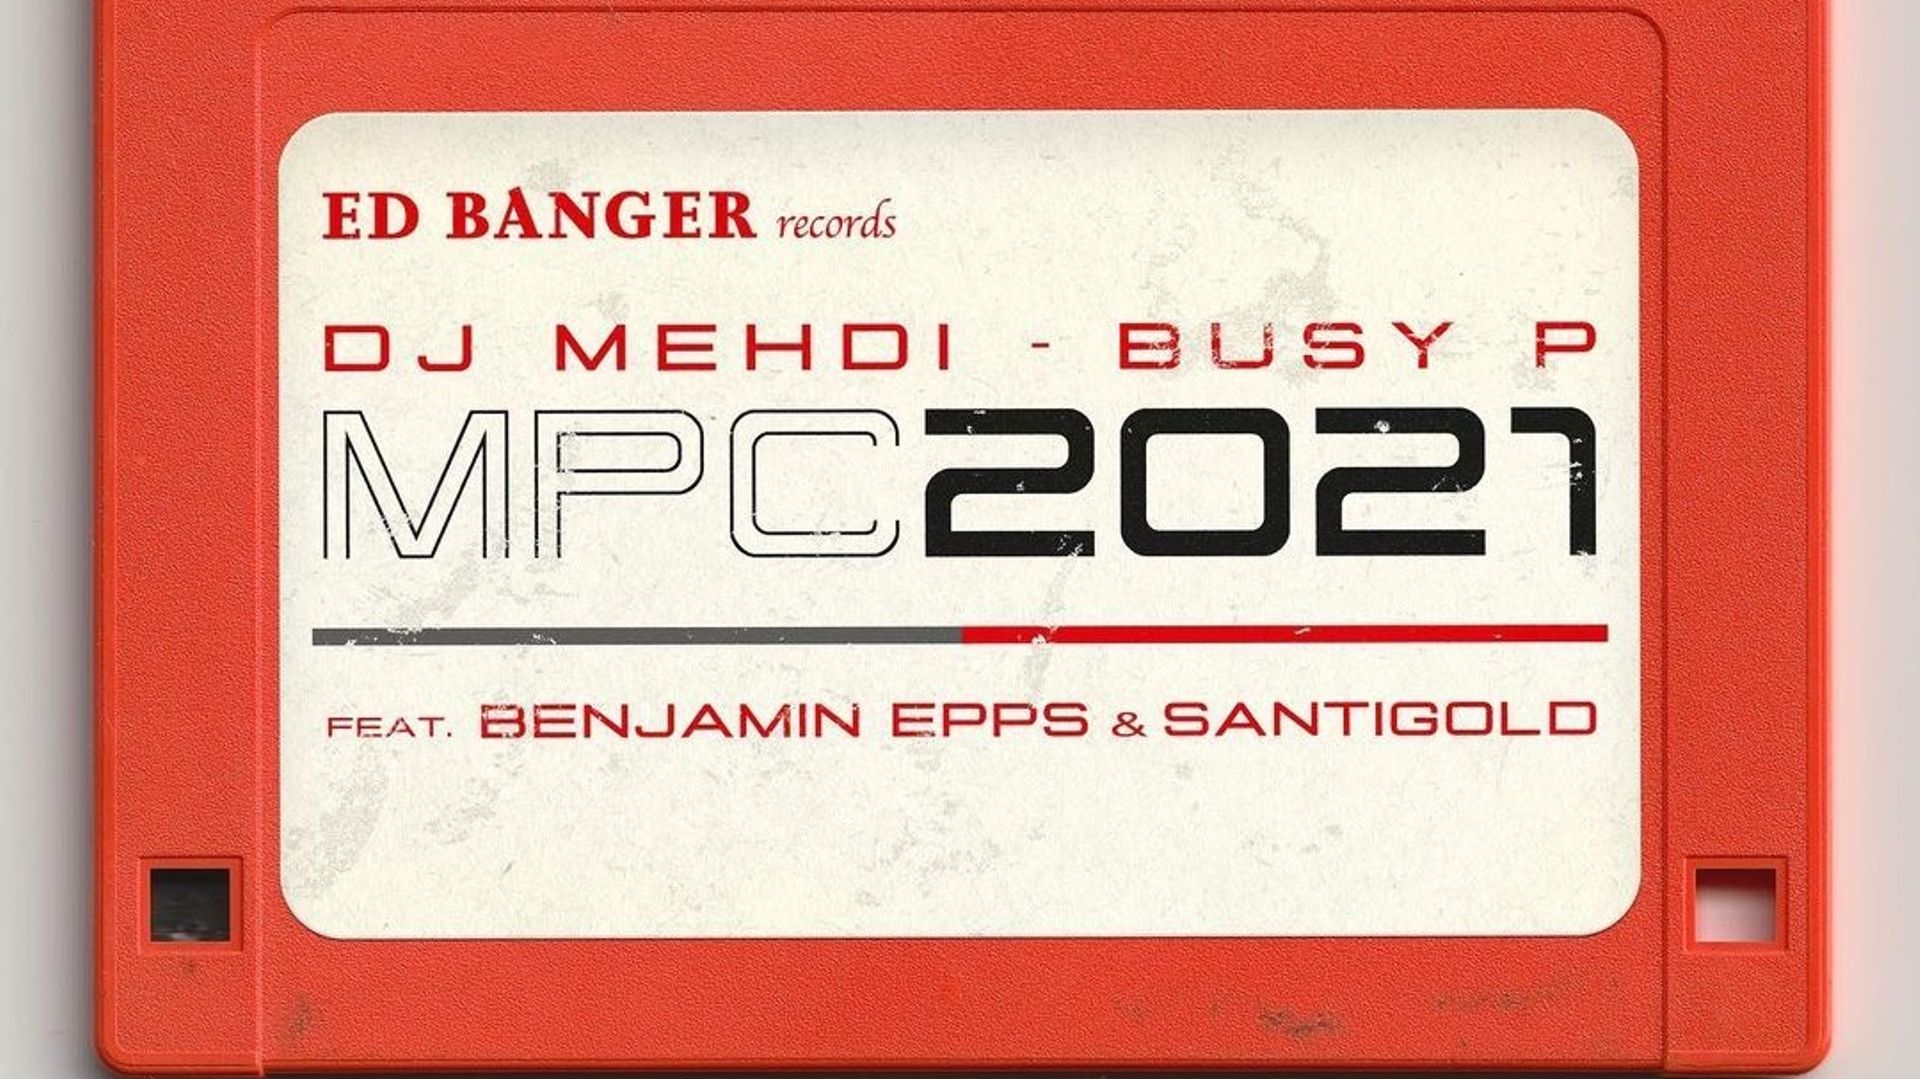 Ed Banger ressucite une prod oubliée de DJ Mehdi et invite Benjamin Epps et Santigold dessus